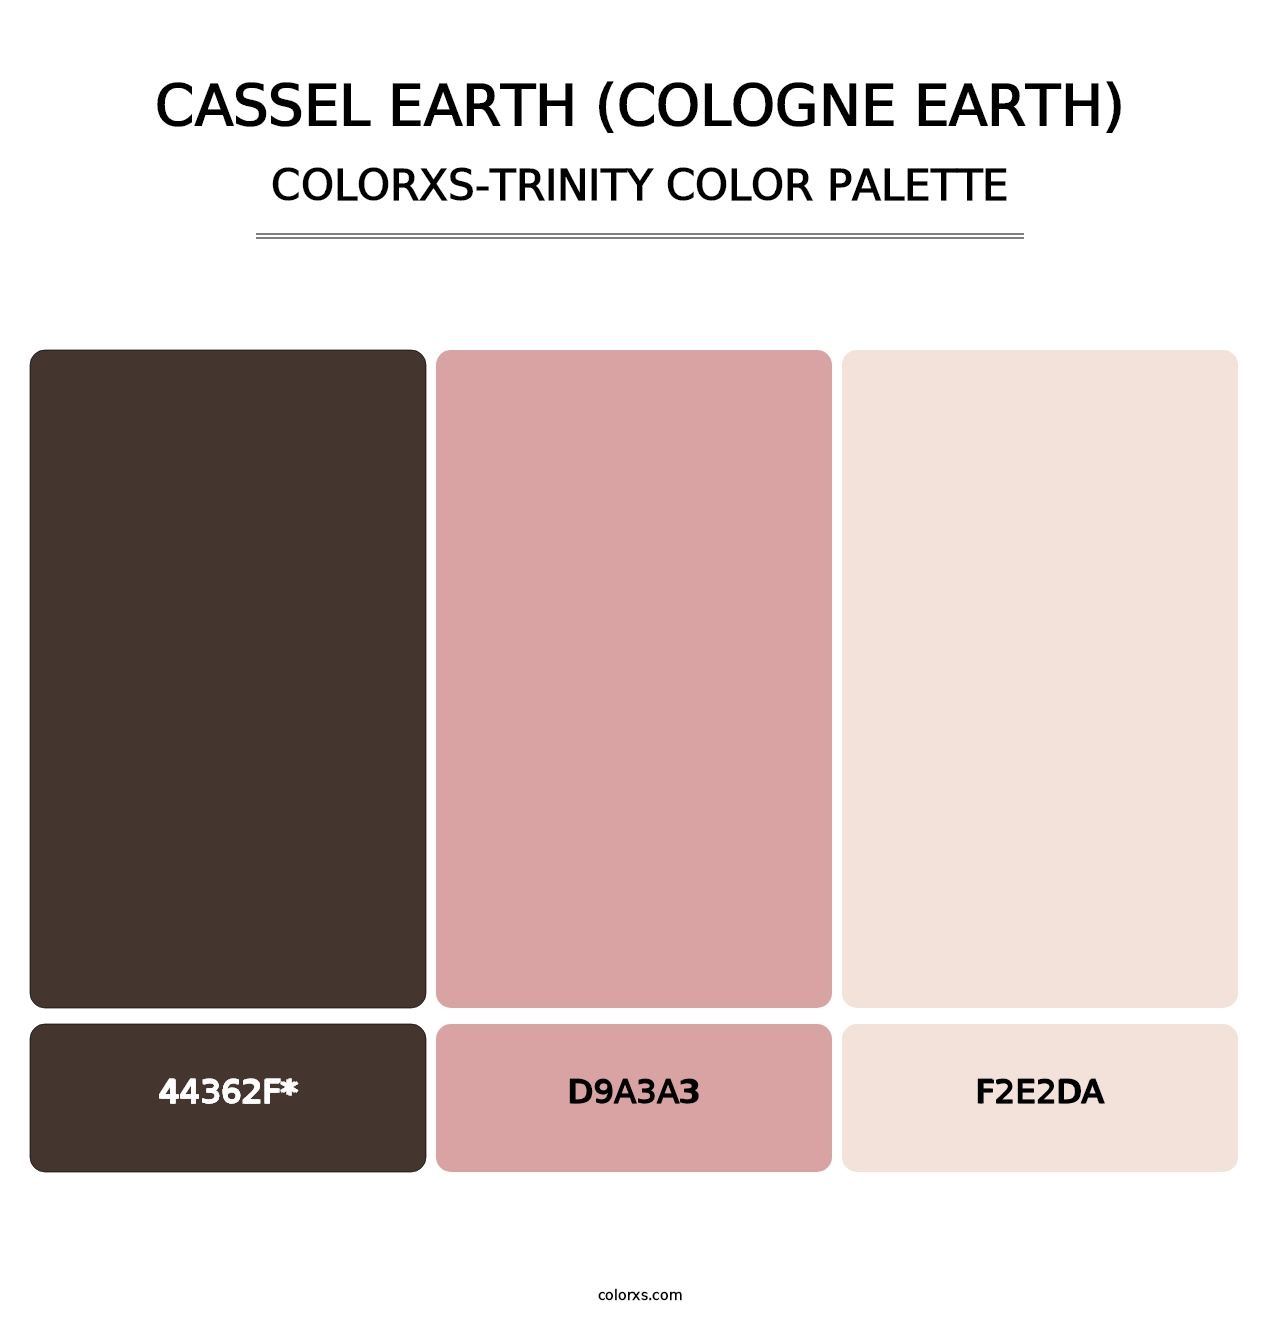 Cassel Earth (Cologne Earth) - Colorxs Trinity Palette